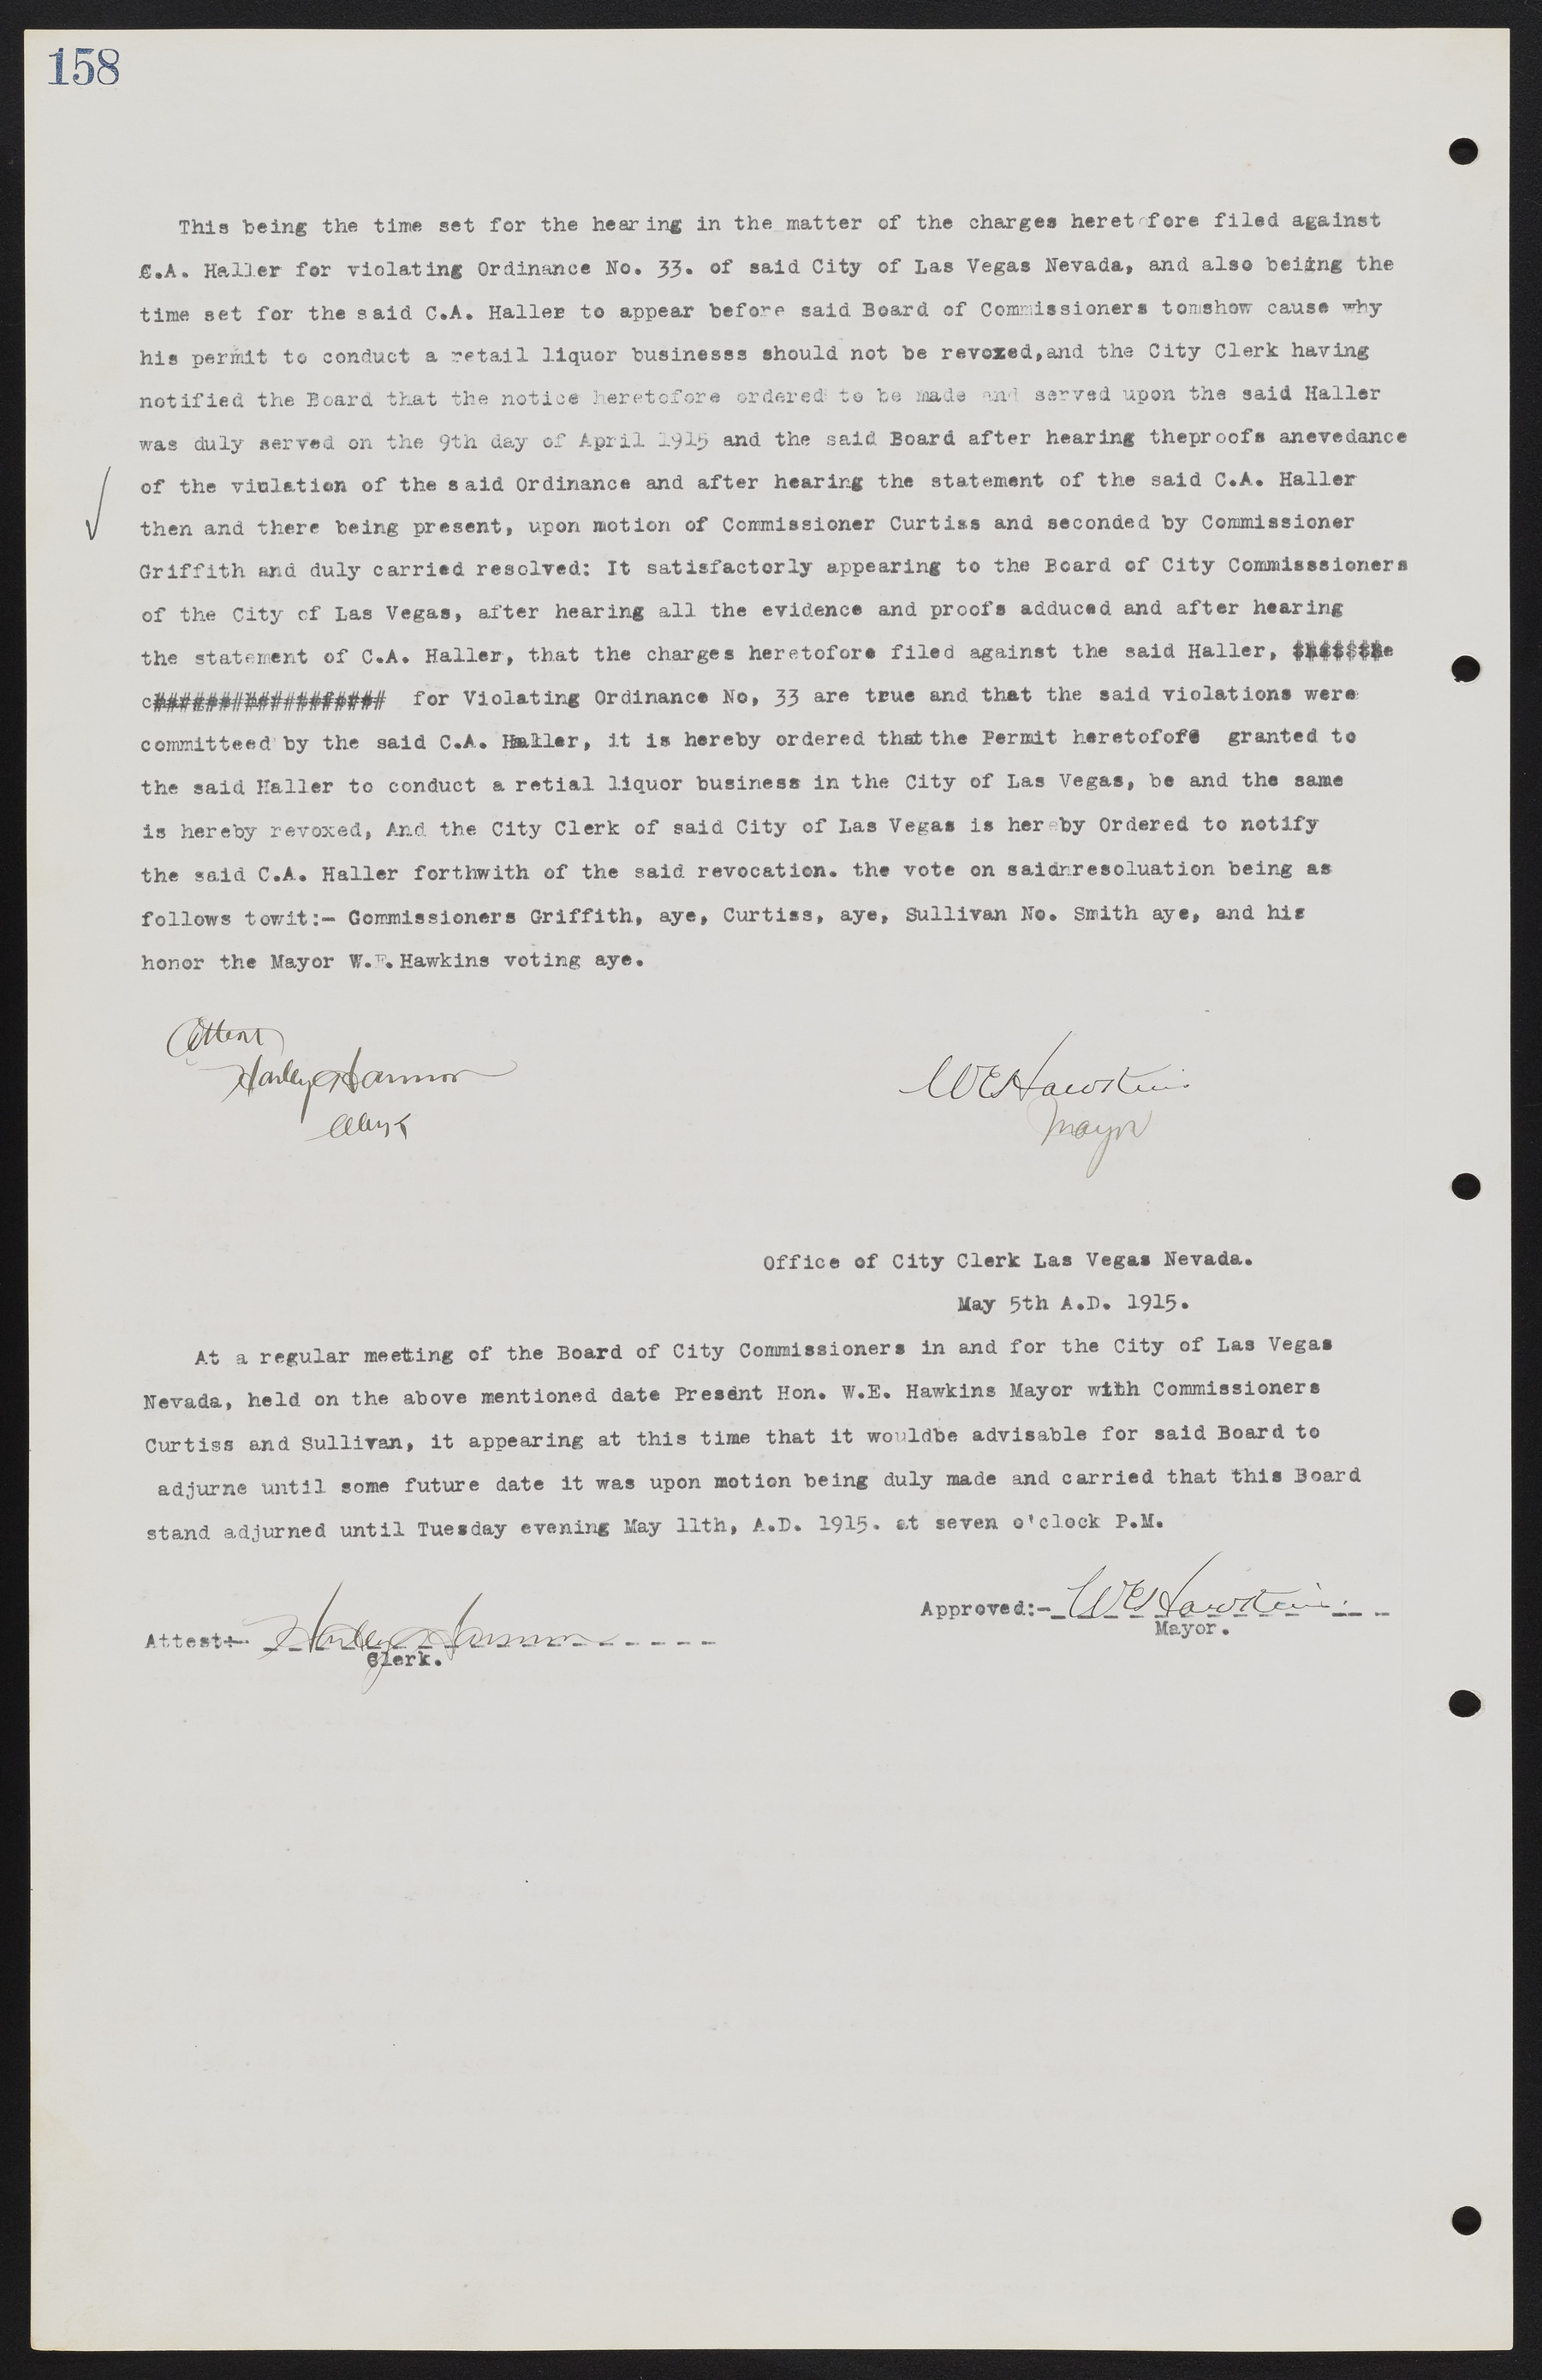 Las Vegas City Commission Minutes, June 22, 1911 to February 7, 1922, lvc000001-174